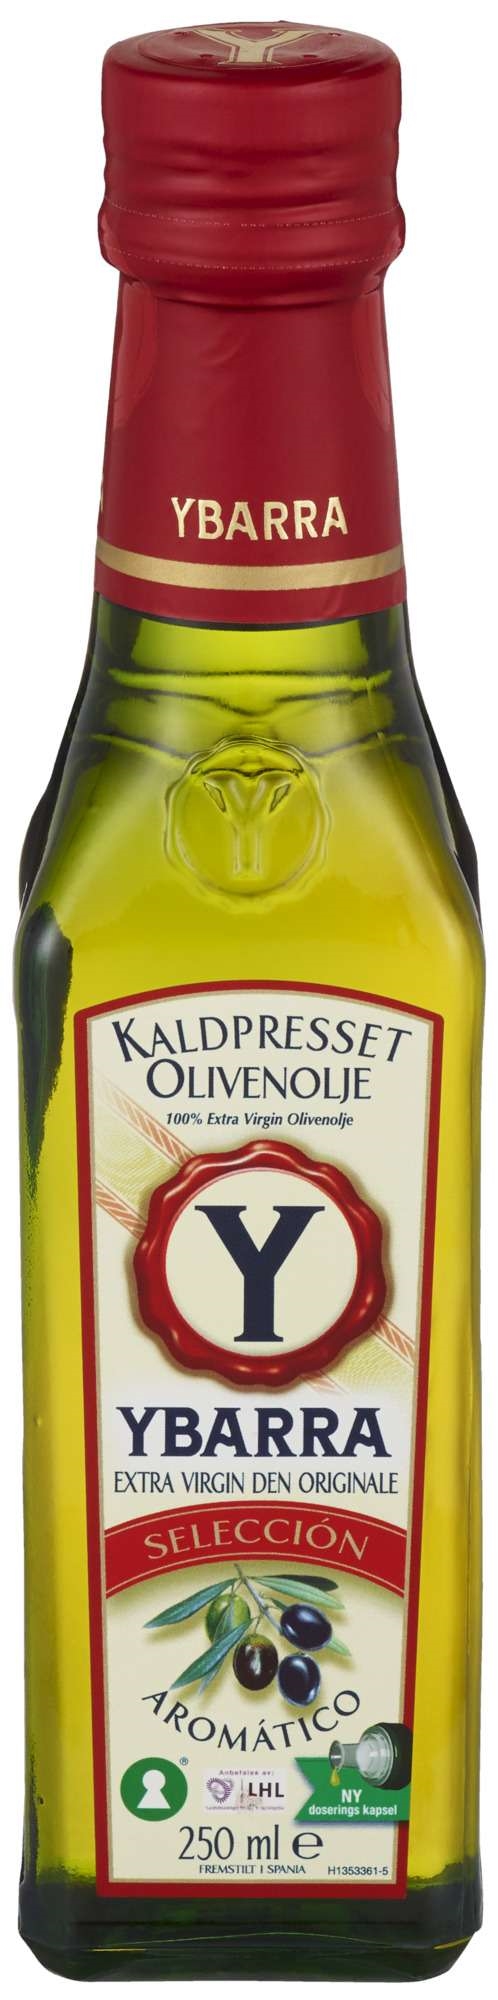 Extra virgin olivenolje seleccion   250ml